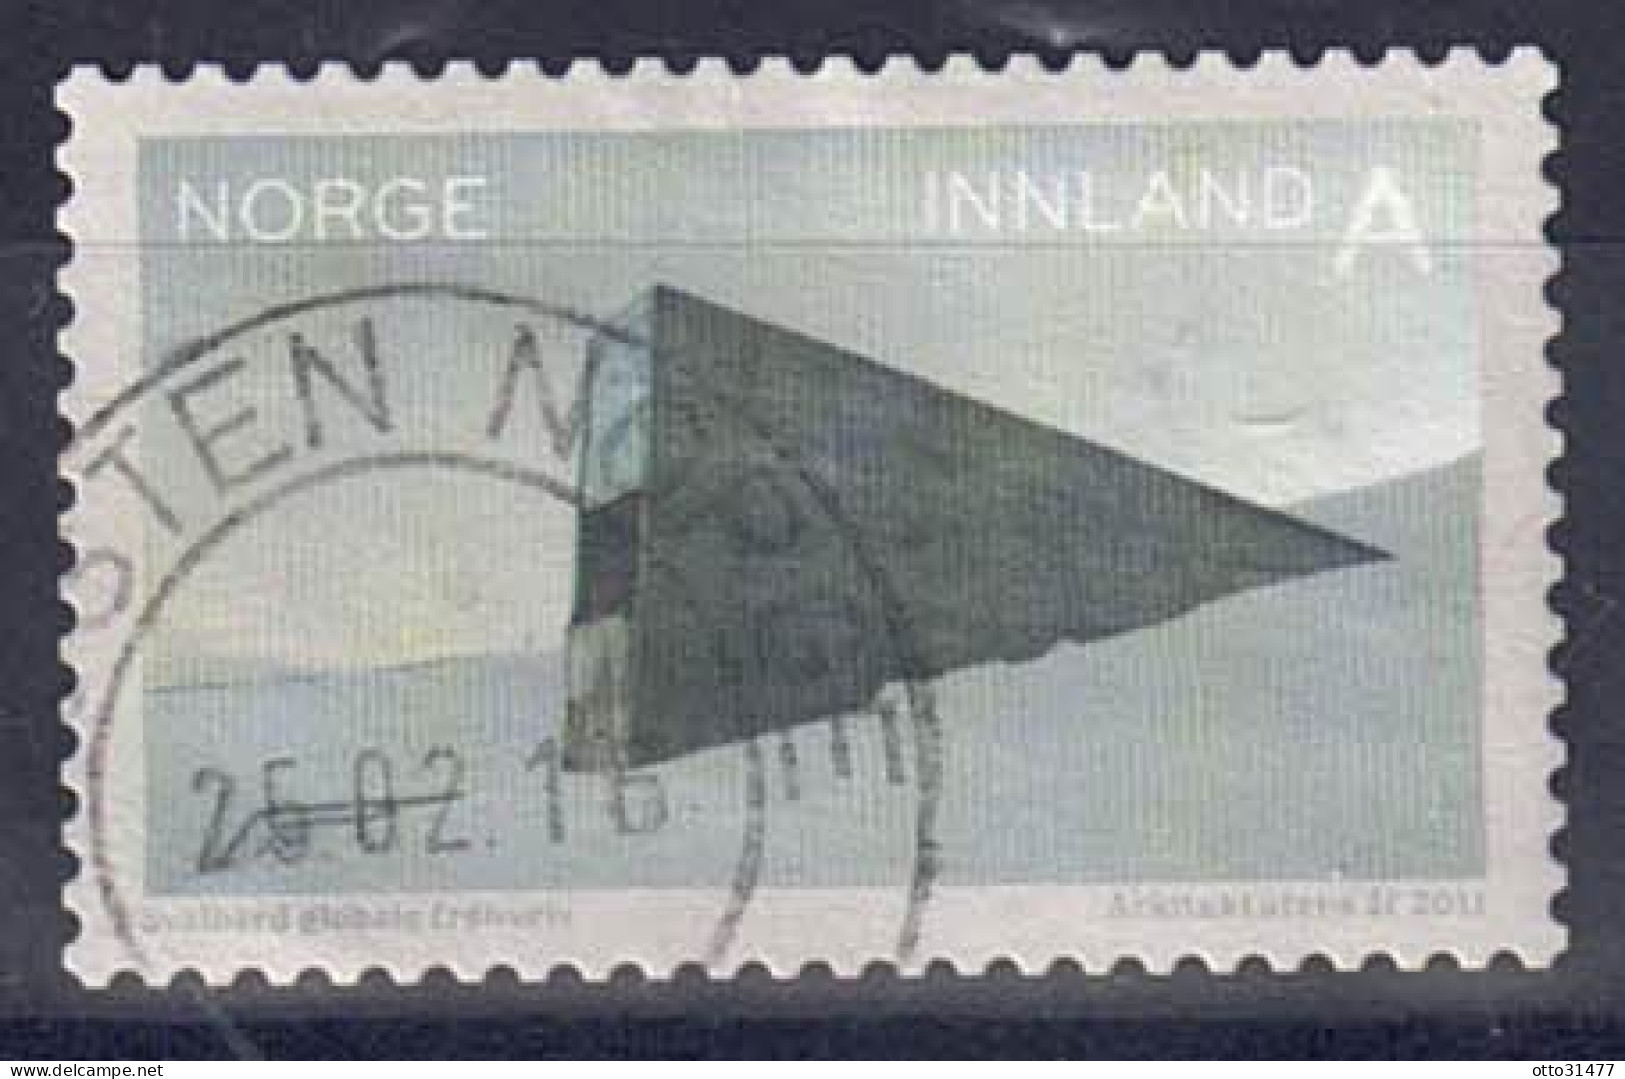 Norwegen 2012 - Tourismus, Nr. 1752, Gestempelt / Used - Used Stamps